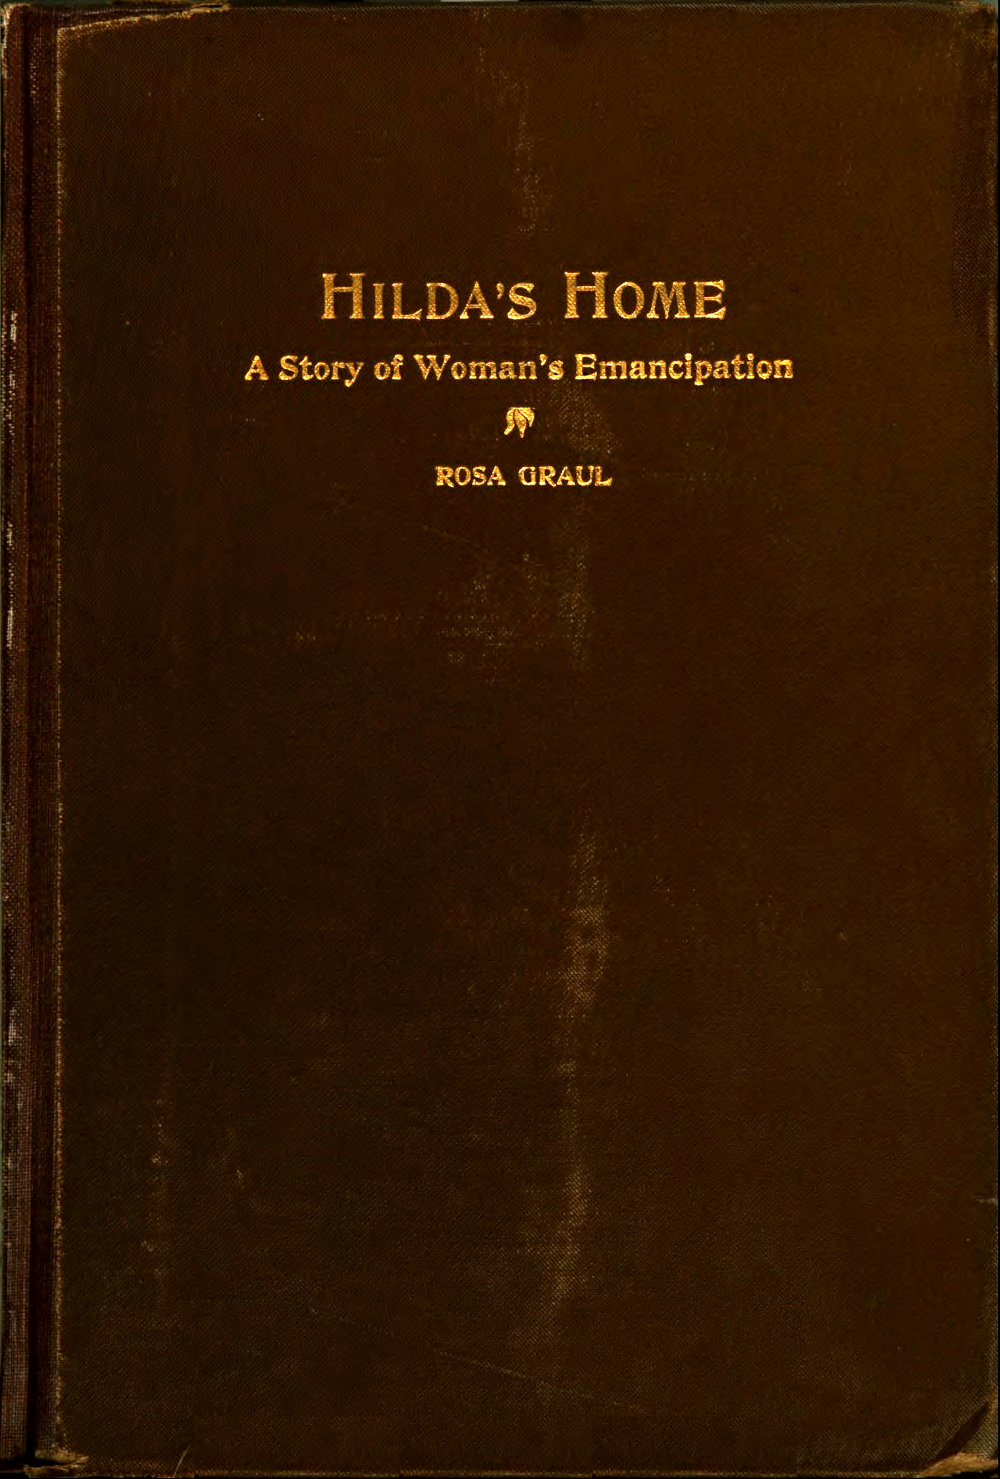 Hilda's Home: A Story of Woman's Emancipation